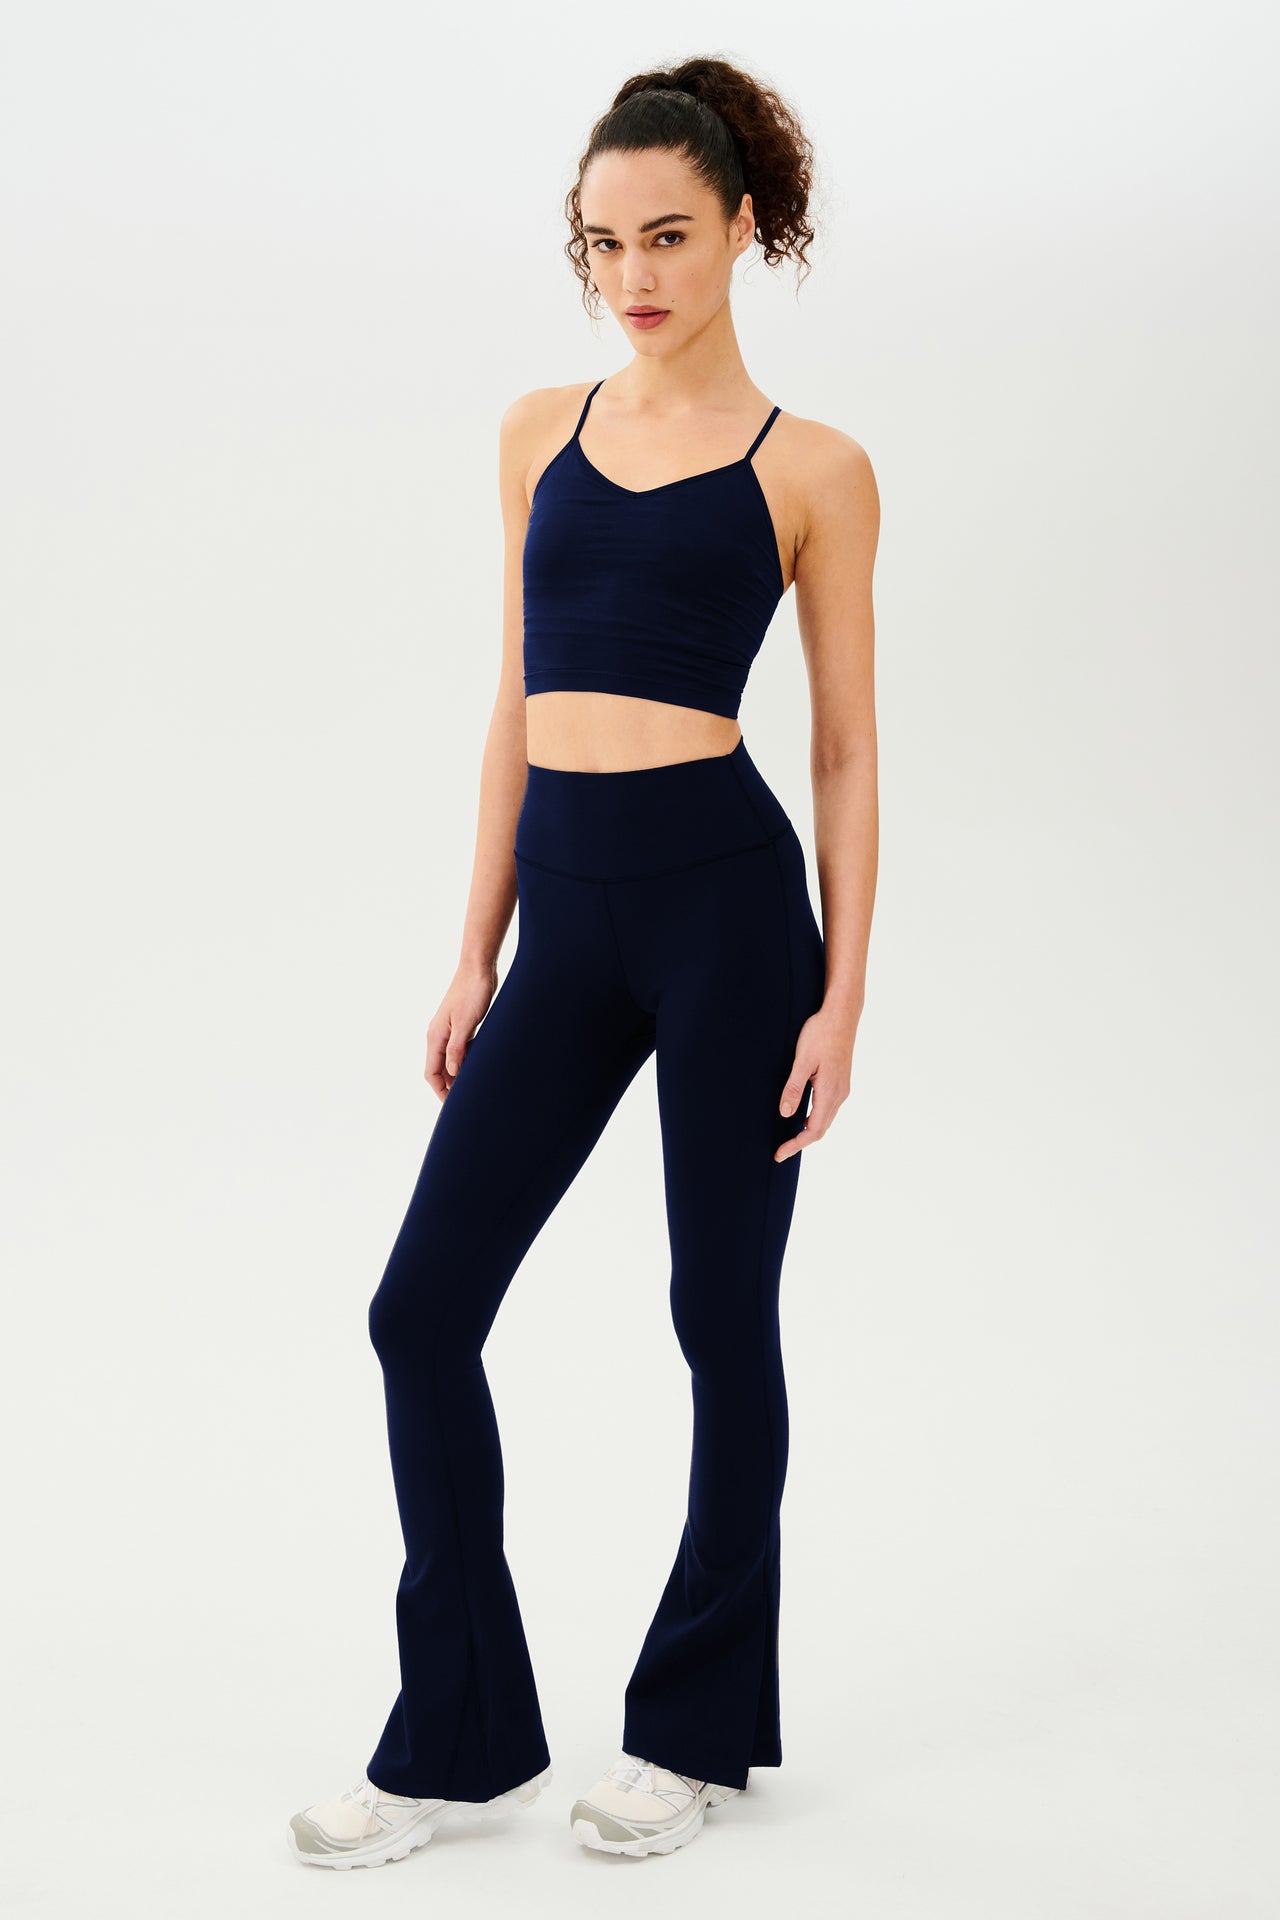 The model is wearing a navy crop top and SPLITS59 Raquel High Waist Flare w/ Split Hem - Indigo leggings.